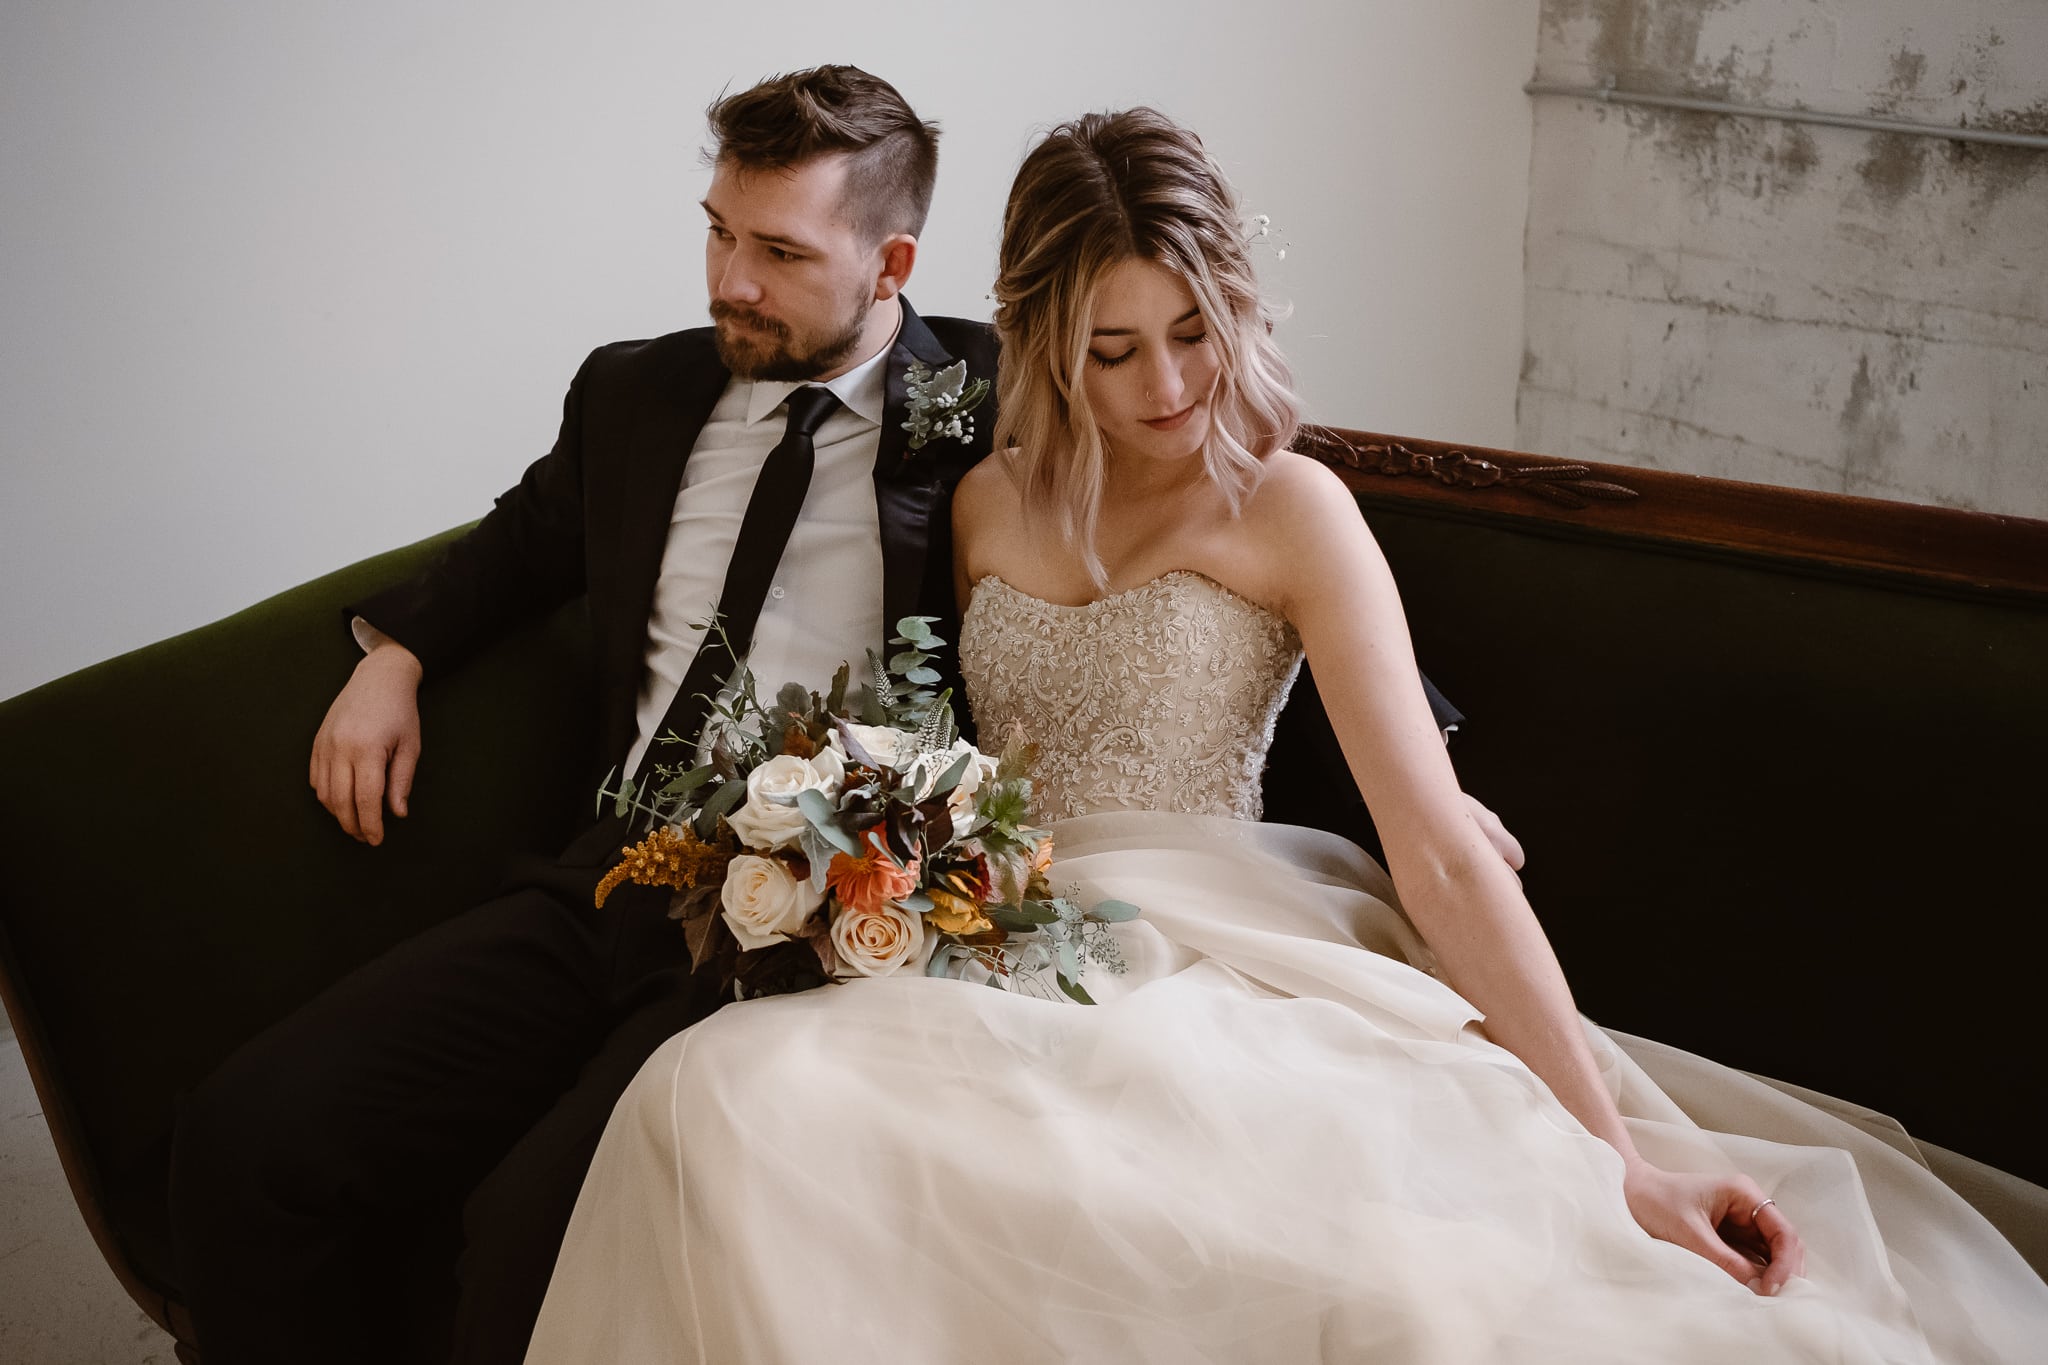 St Vrain Wedding Photographer | Longmont Wedding Photographer | Colorado Winter Wedding Photographer, Colorado industrial chic wedding, bride and groom portraits